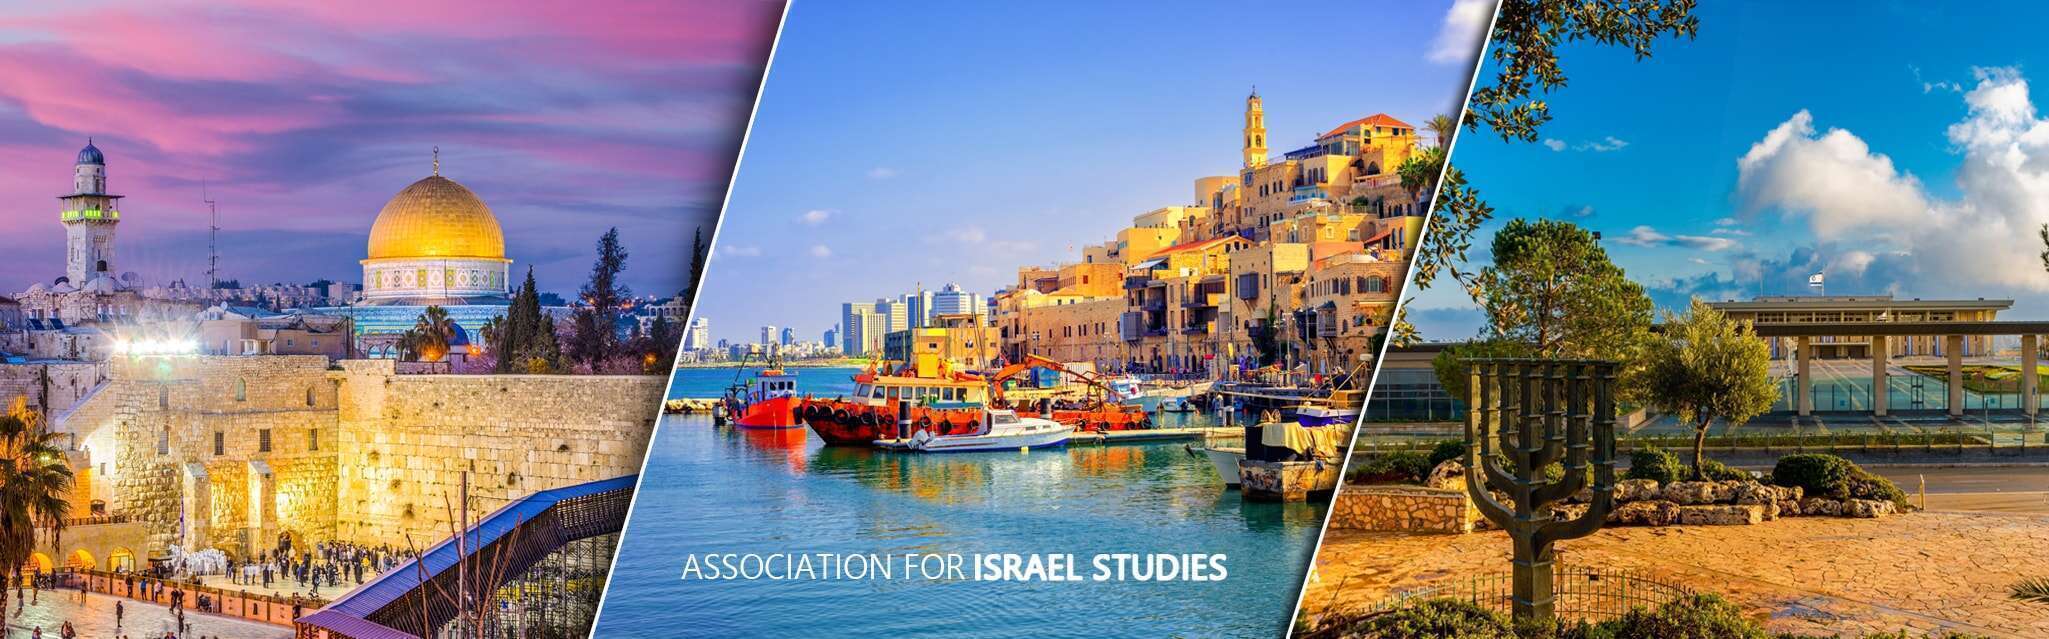 AIS Israel Studies